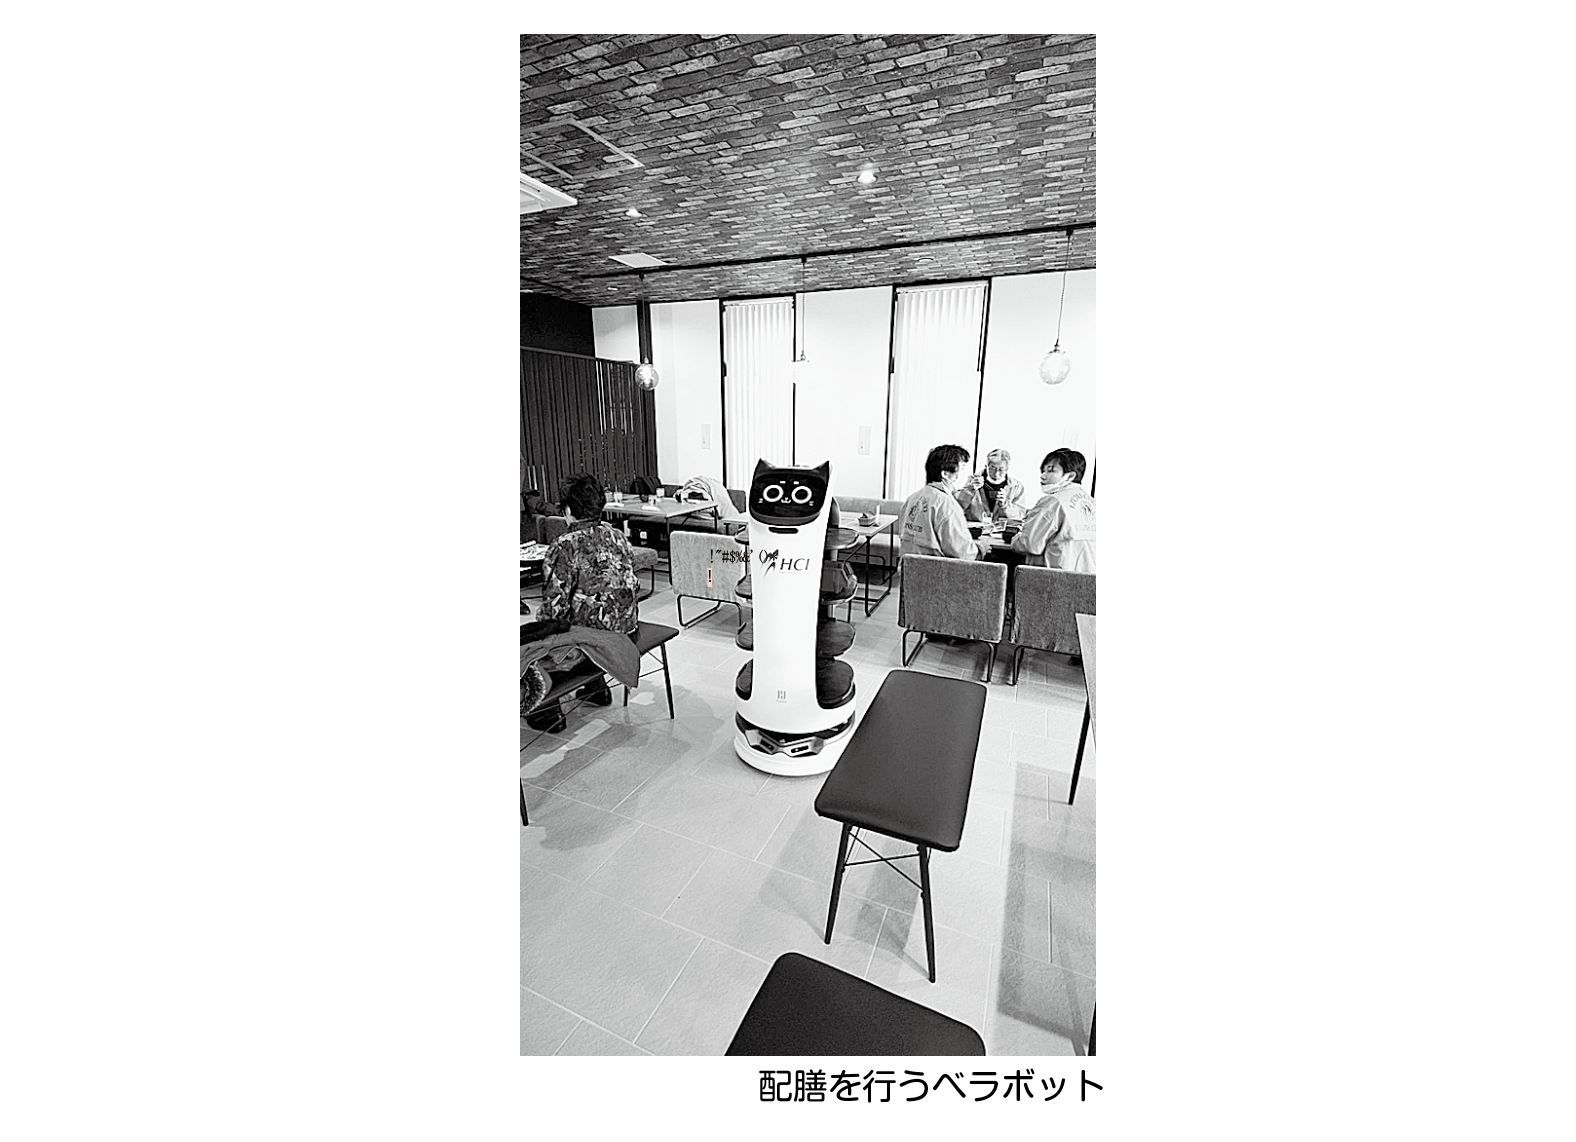 HCI 和泉市にサービスロボットを納入 新庁舎内レストランがオープンの画像